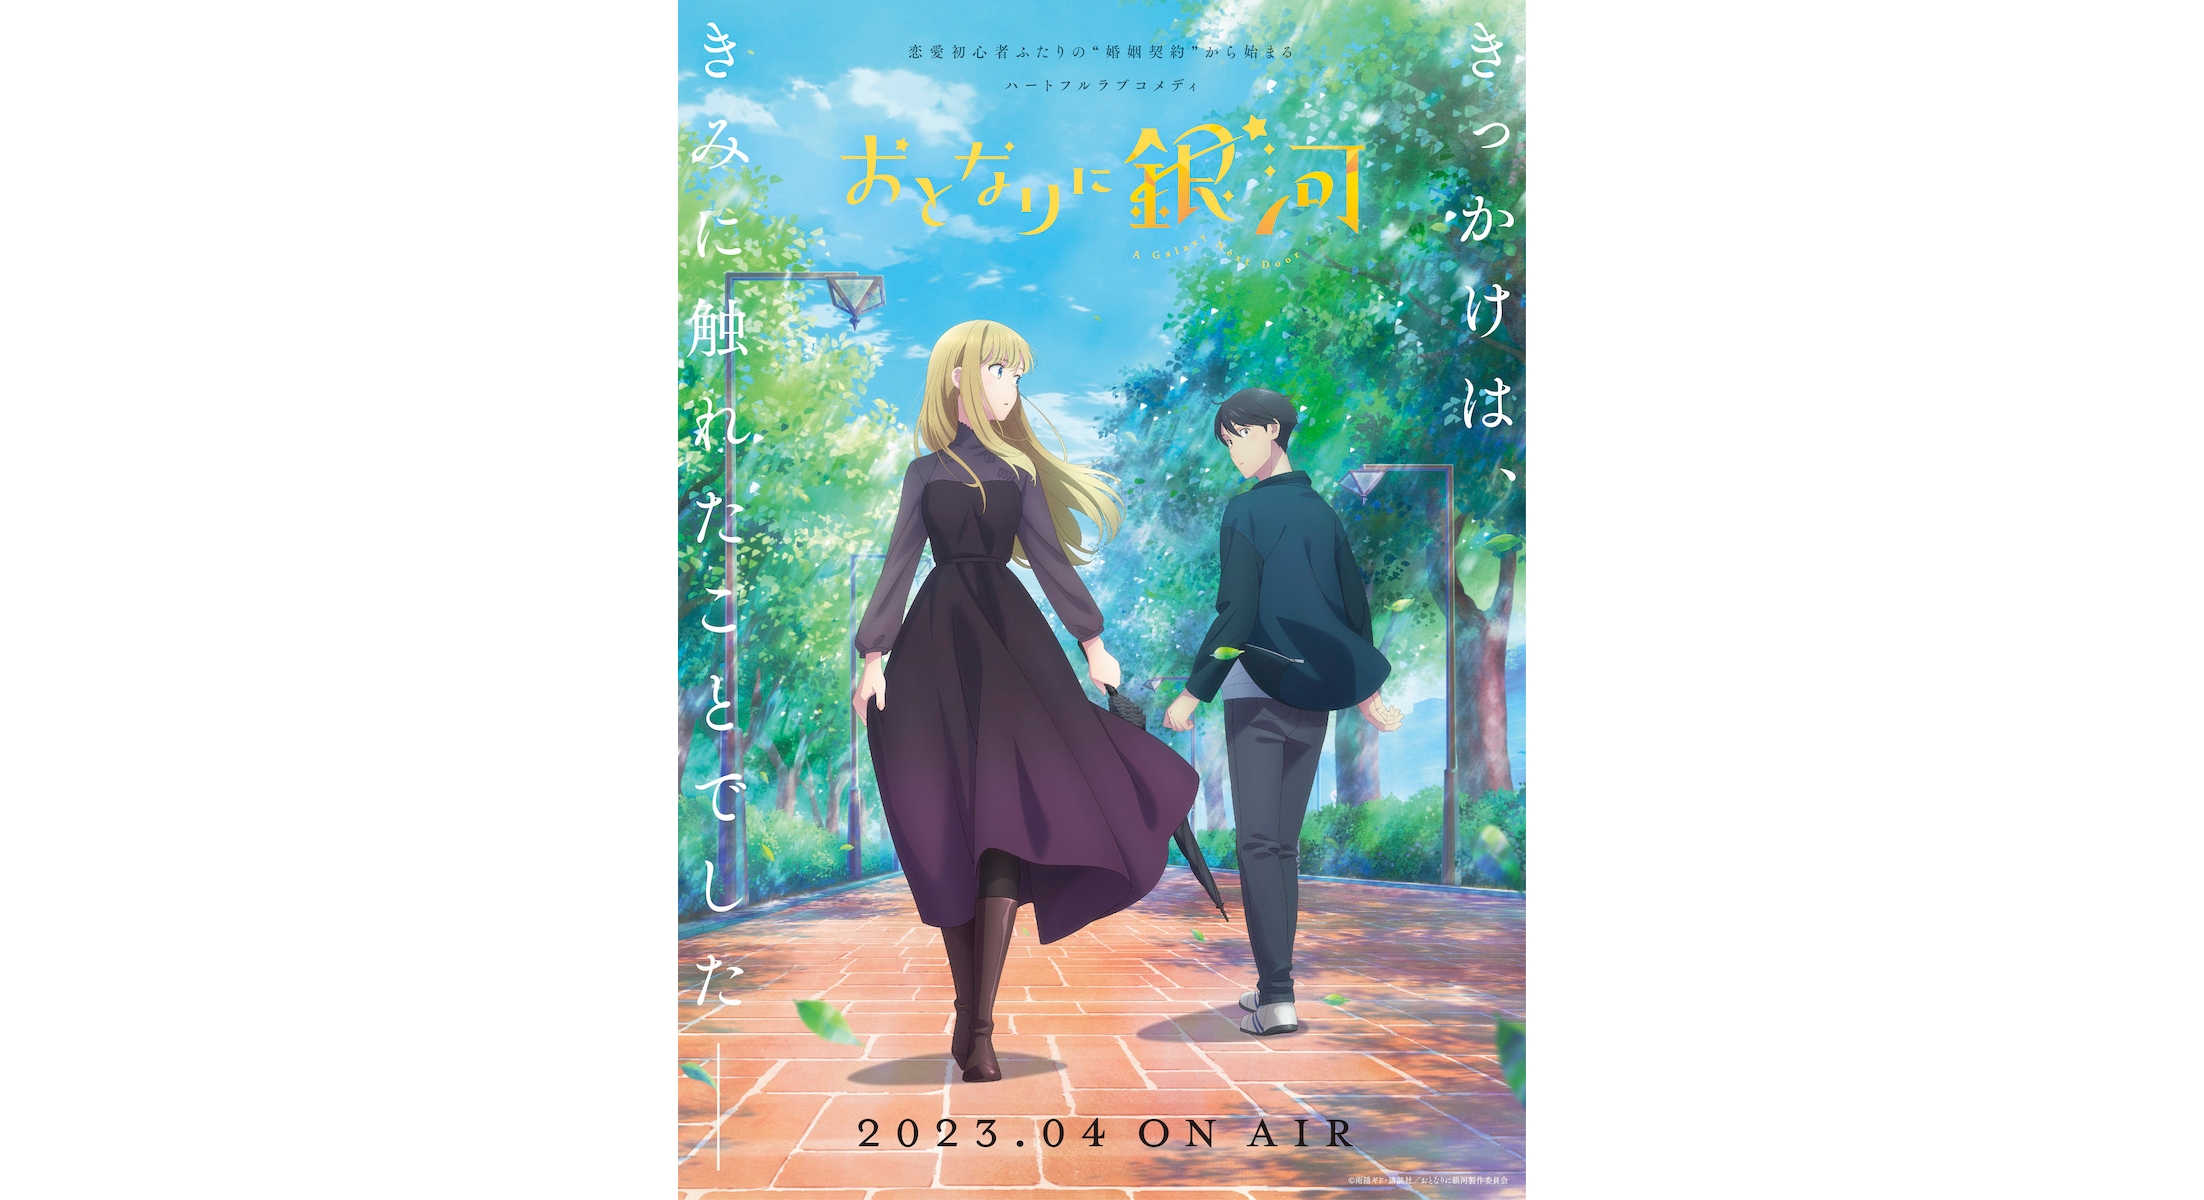 Manga Series A Galaxy Next Door Gets Anime Adaptation in April 2023 First  Visual and Trailer Released  MOSHI MOSHI NIPPON  もしもしにっぽん